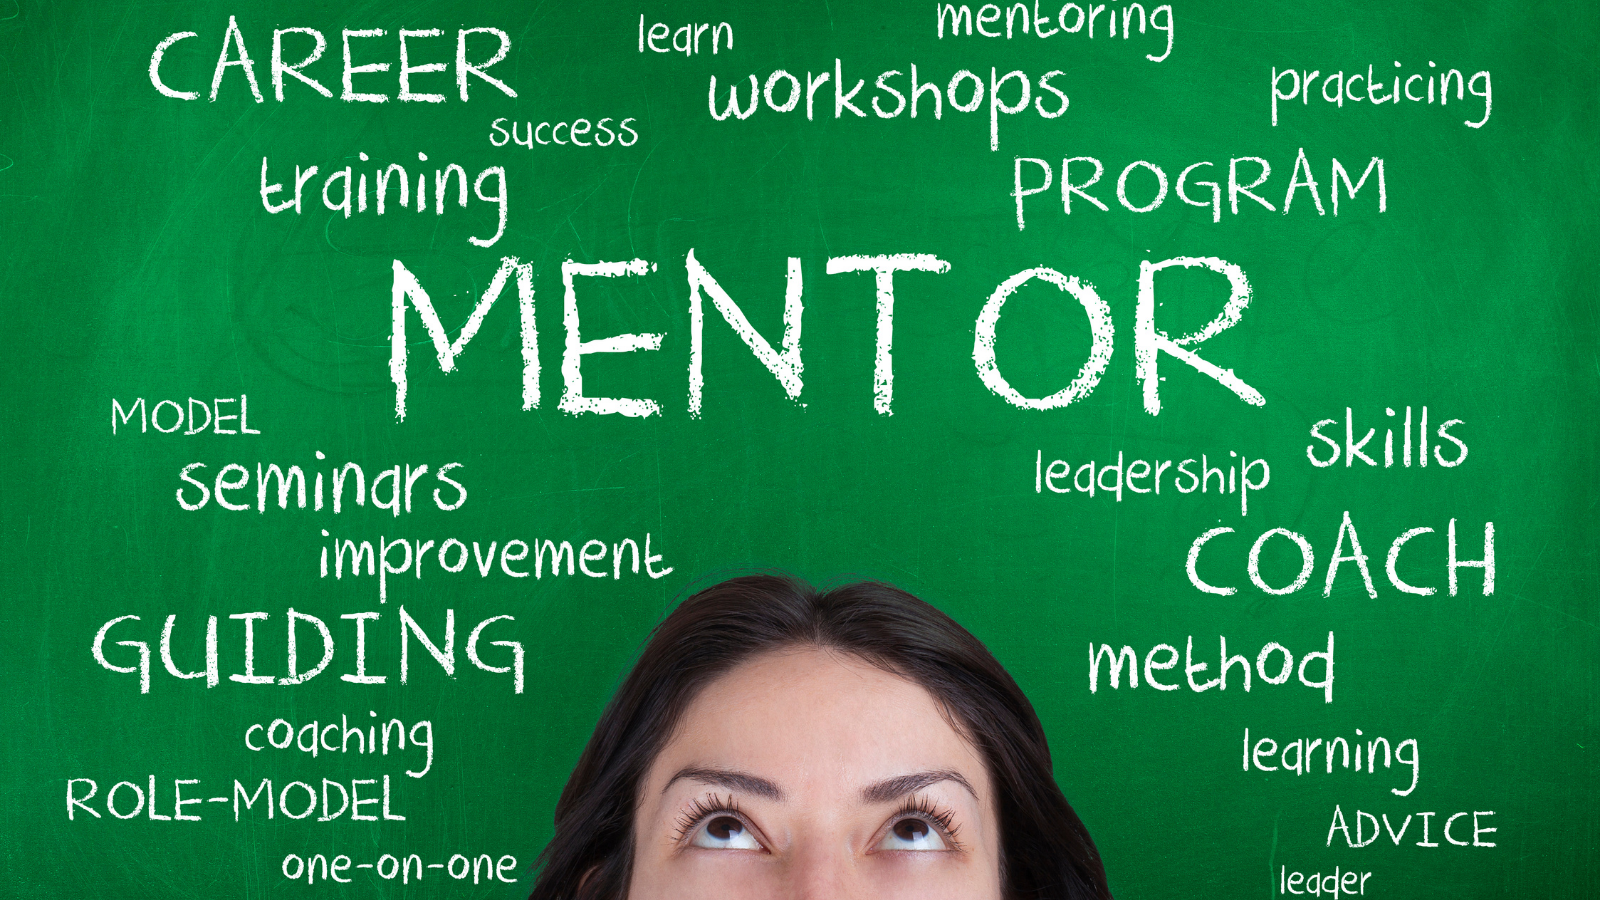 Benefits of having a mentoring program